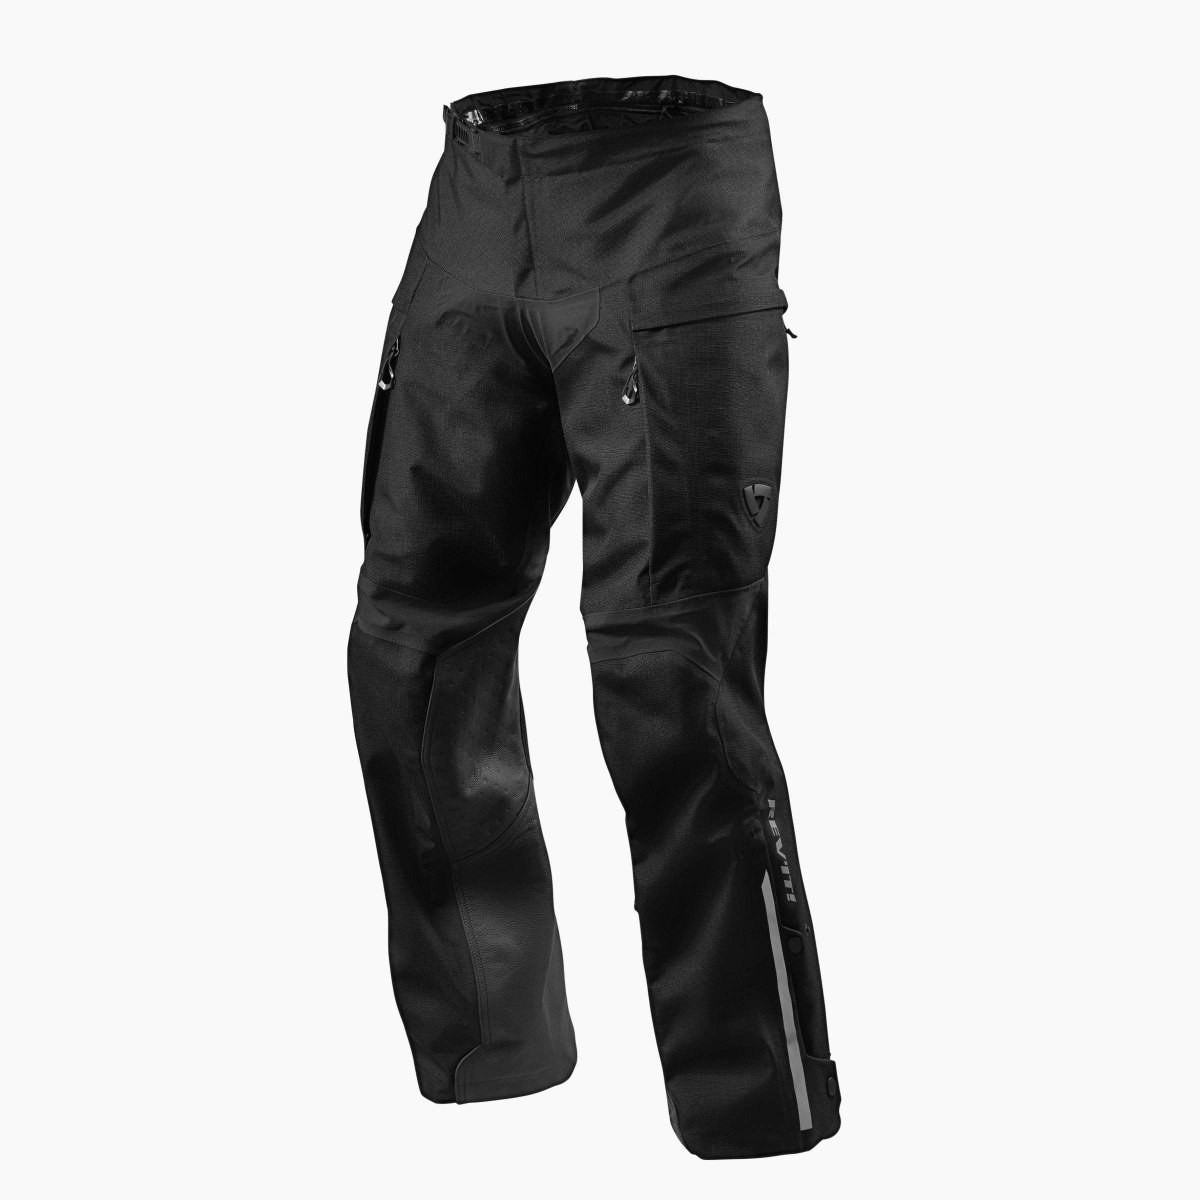 Image of REV'IT! Component H2O Standard Black Motorcycle Pants Size M EN